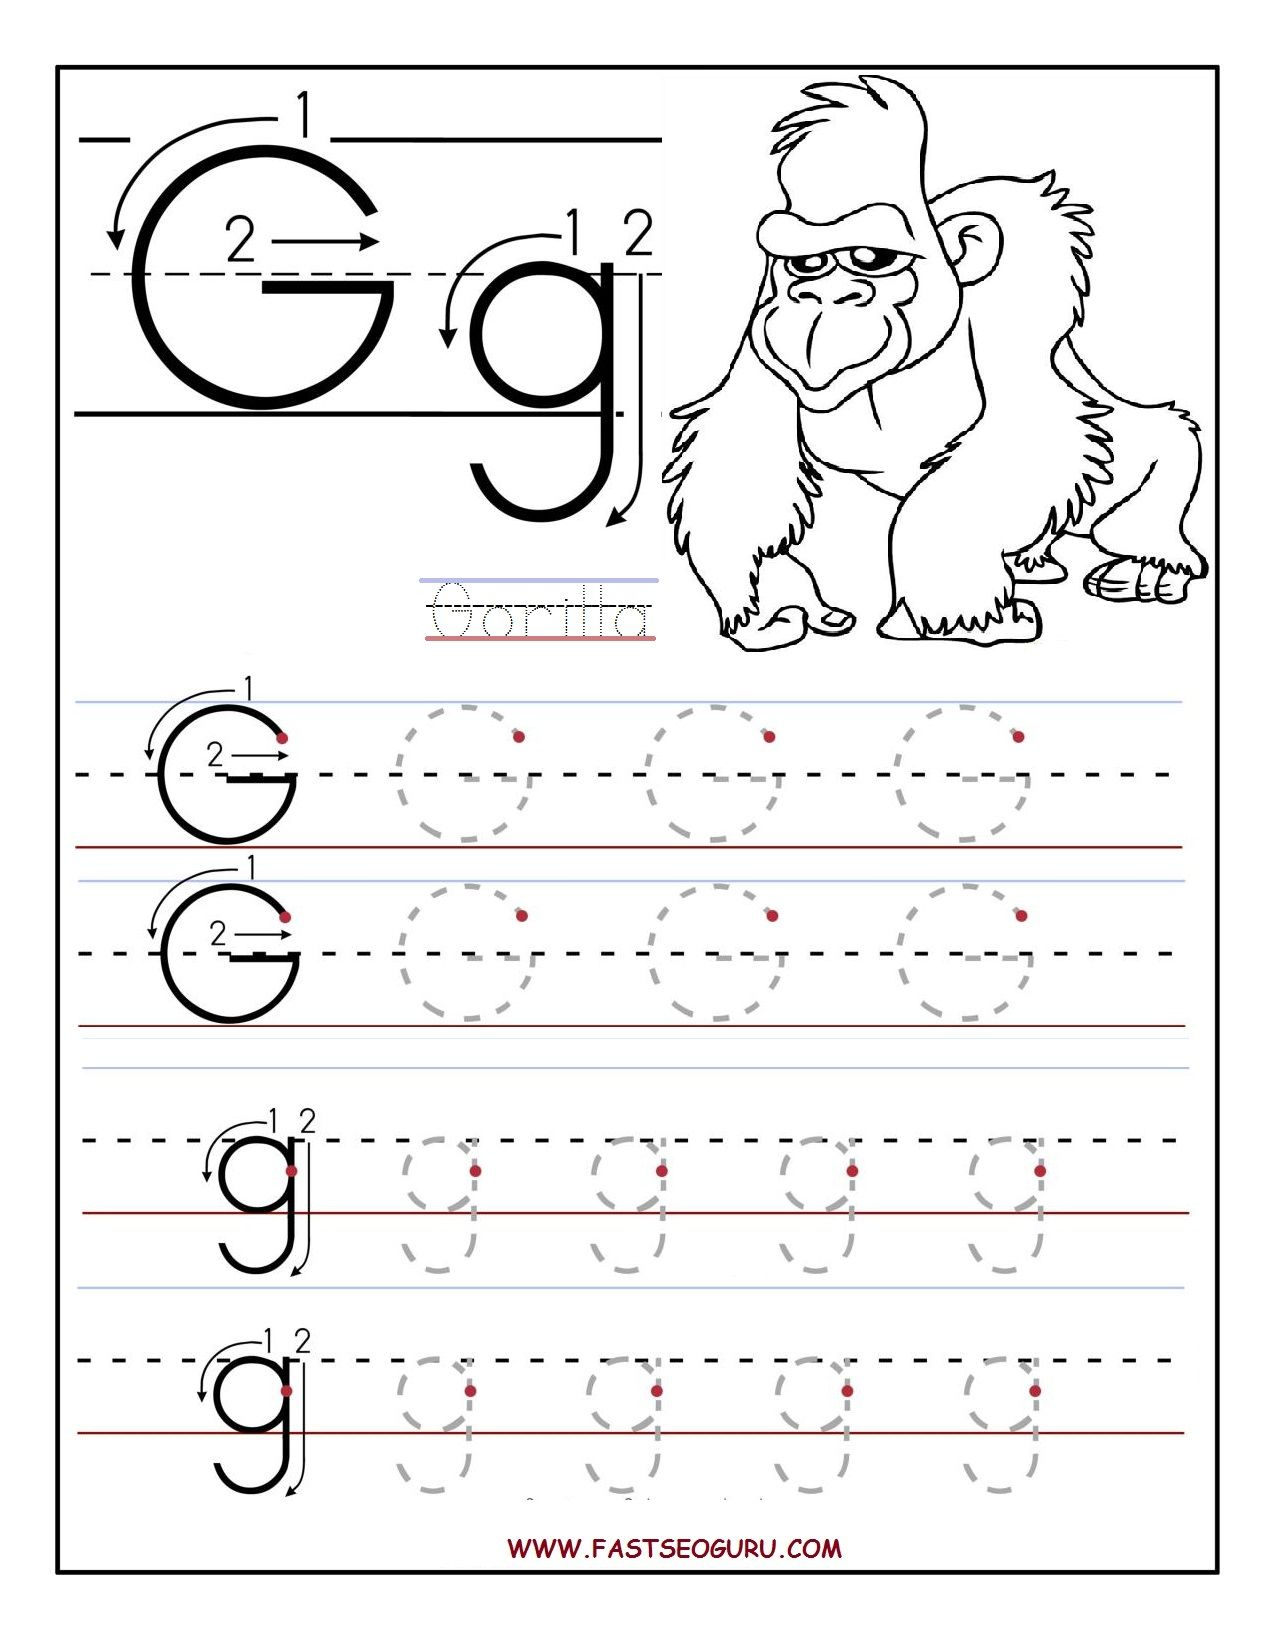 Printable Letter G Tracing Worksheets For Preschool throughout G Letter Tracing Worksheet